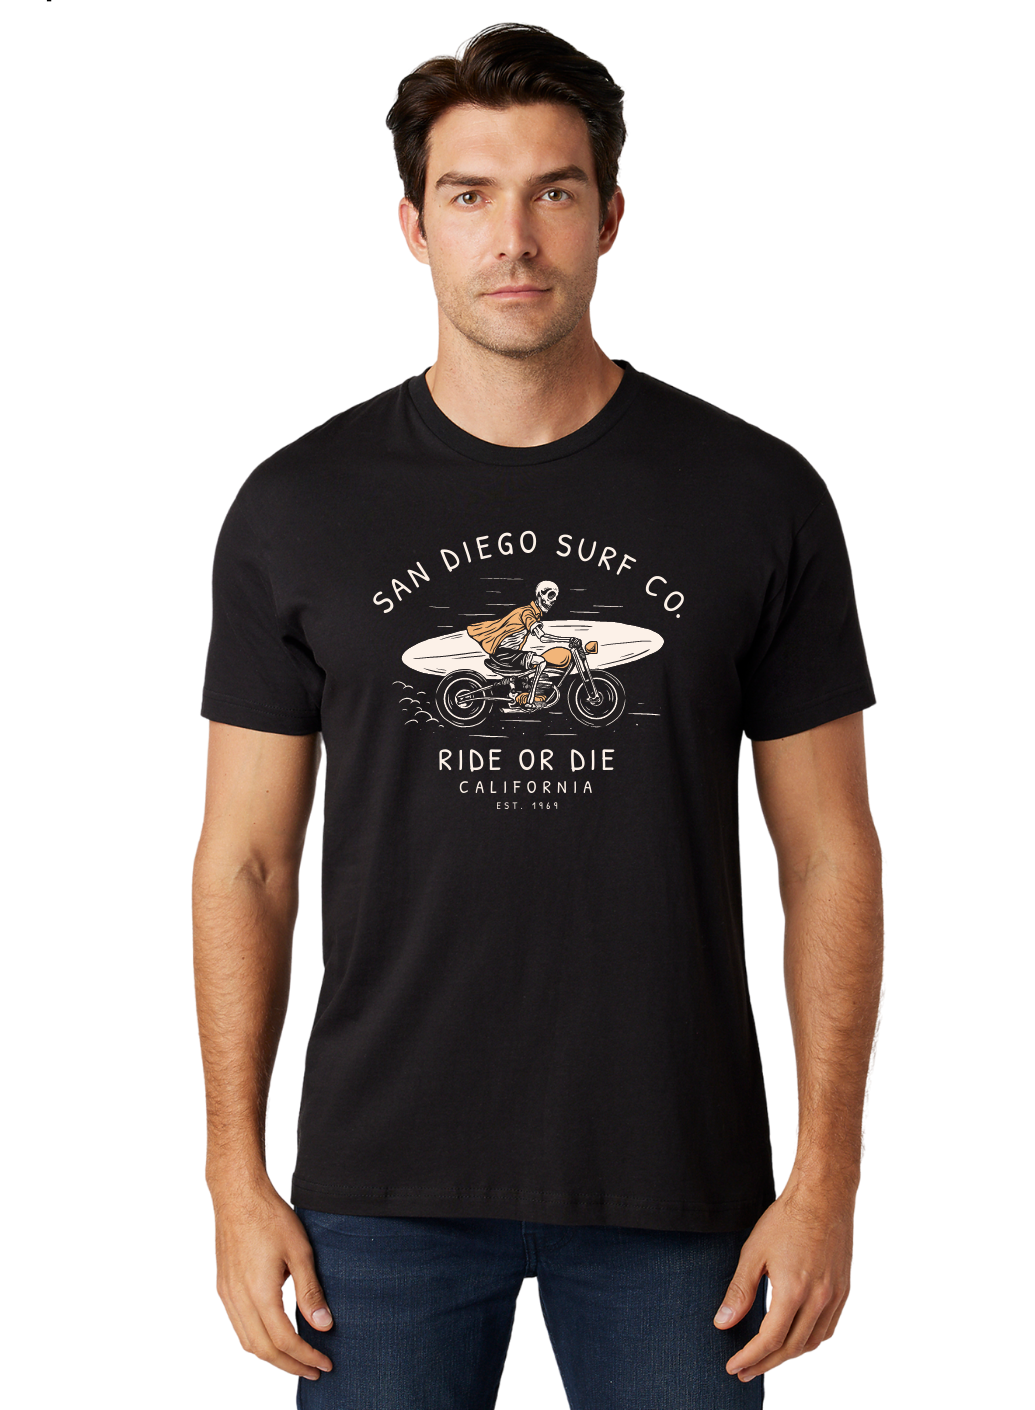 Ride or Die San Diego Surf Co. T-shirt